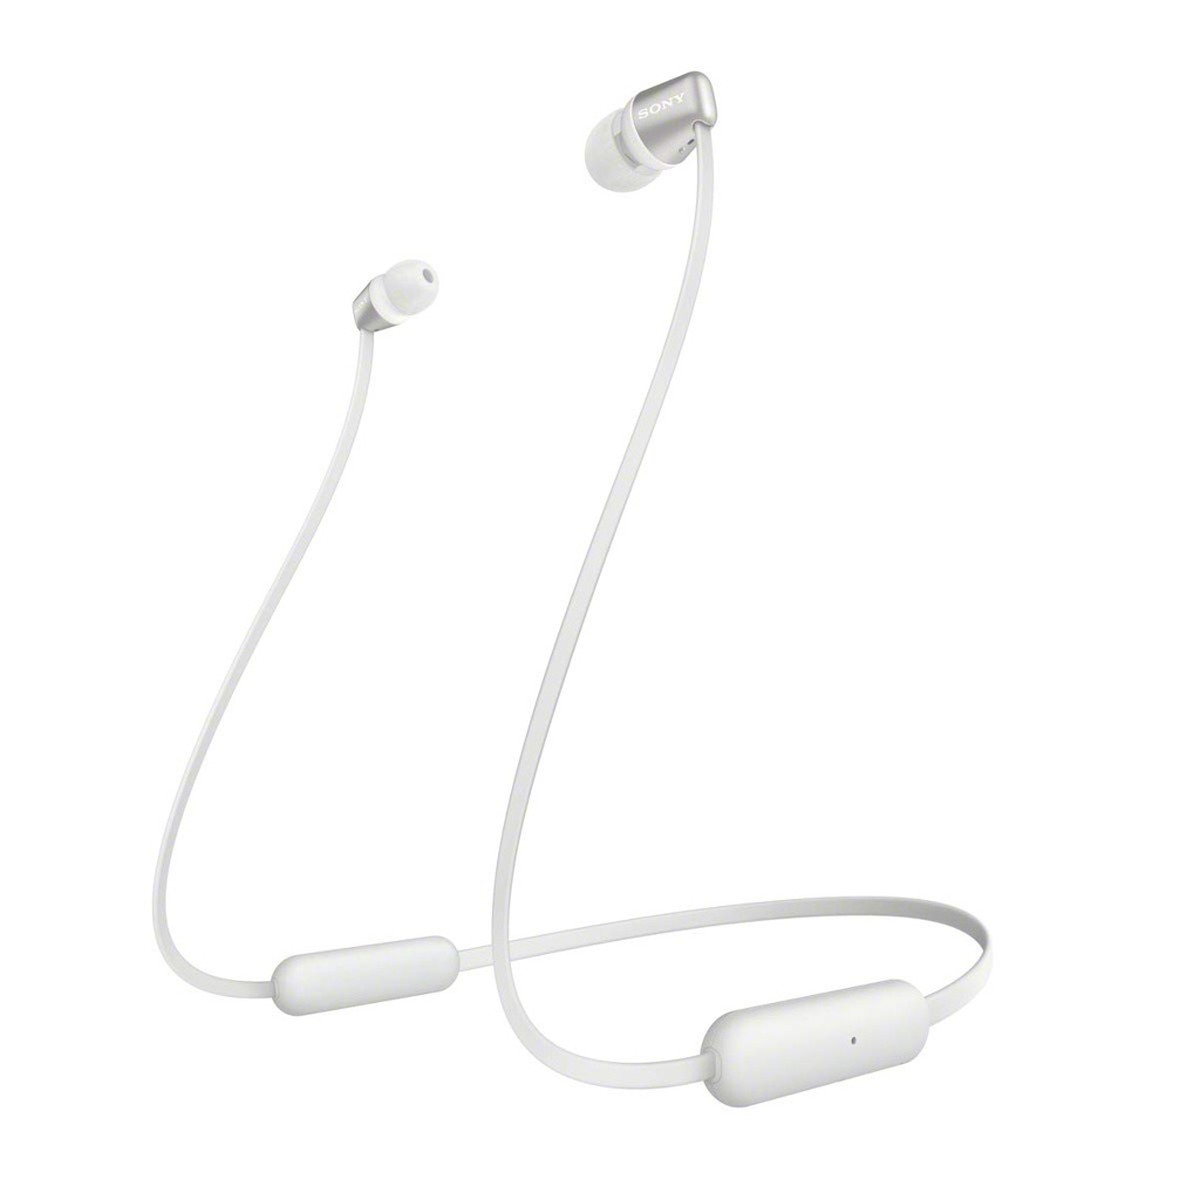 Kopfhörer SONY Bluetooth WI-C310, weiß In-ear